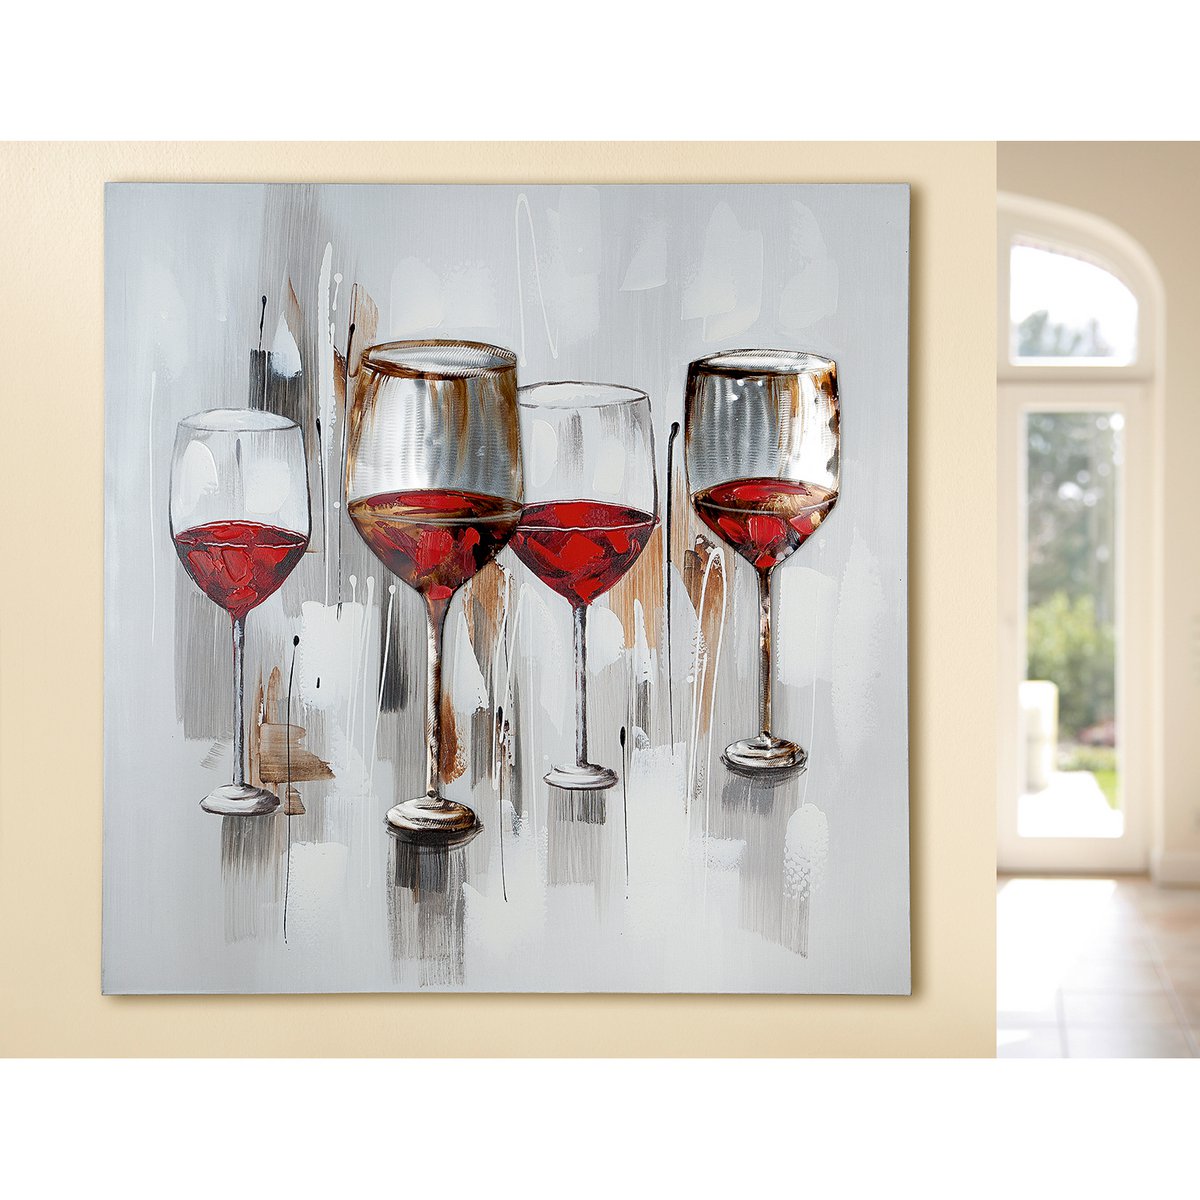 Aluminium/Leinen Bild Gemälde "Weinprobe"